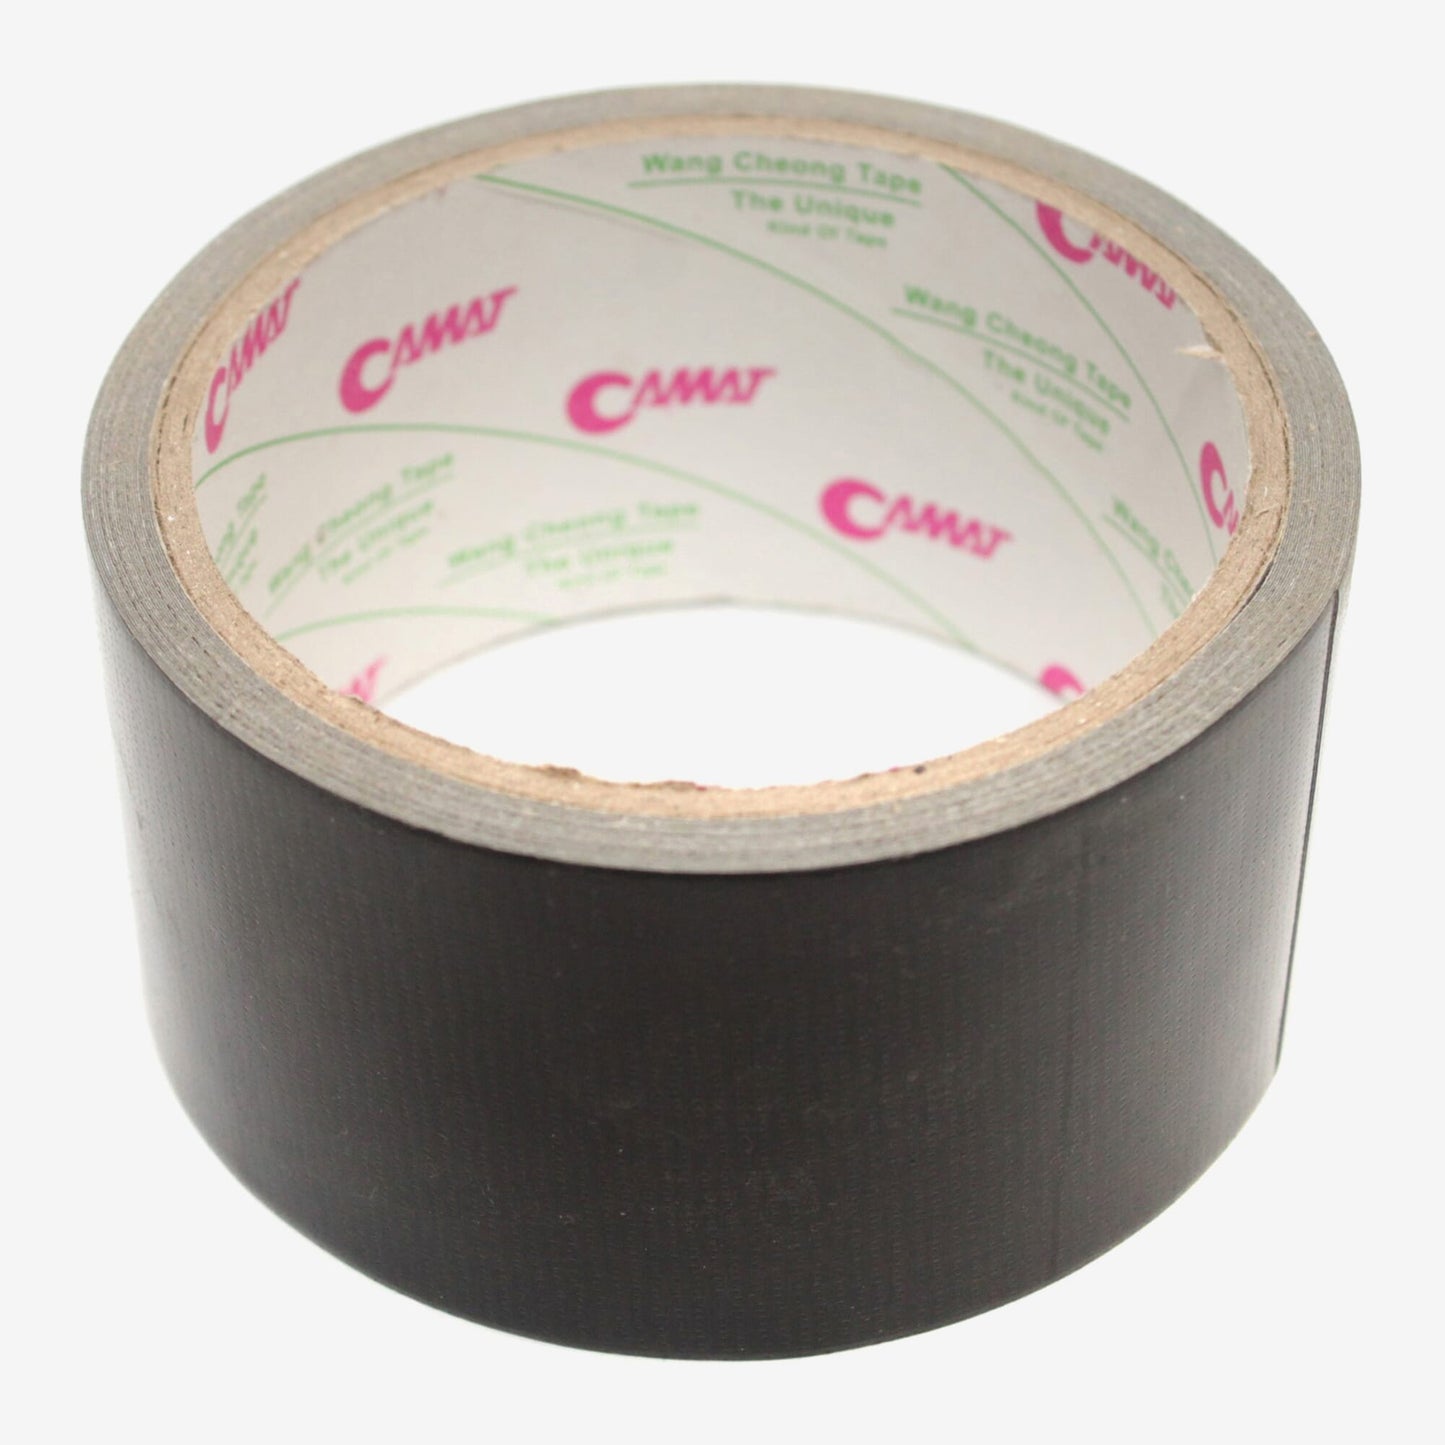 CAMAT 2 inch Binding Tape